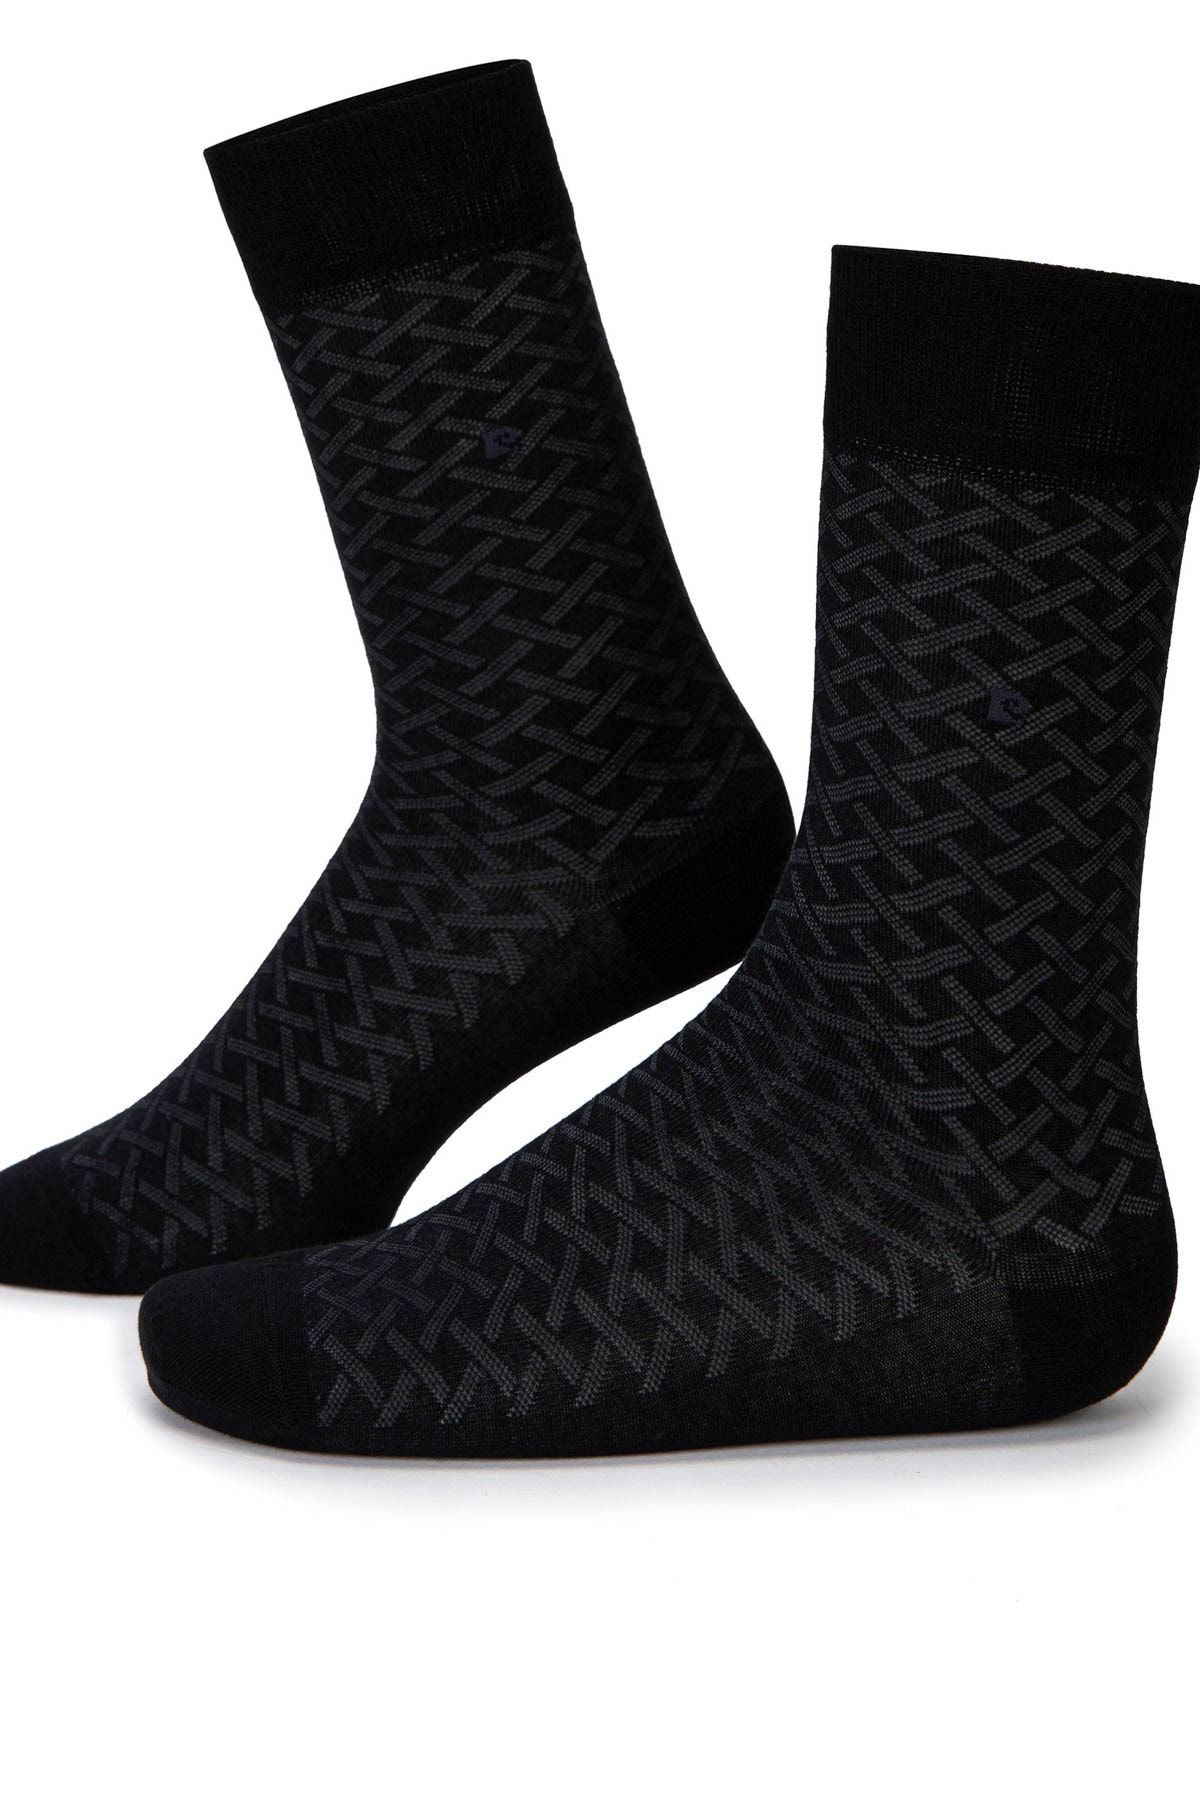 Pierre Cardin Erkek Siyah Çorap A021SZ013.G01.372-SK20